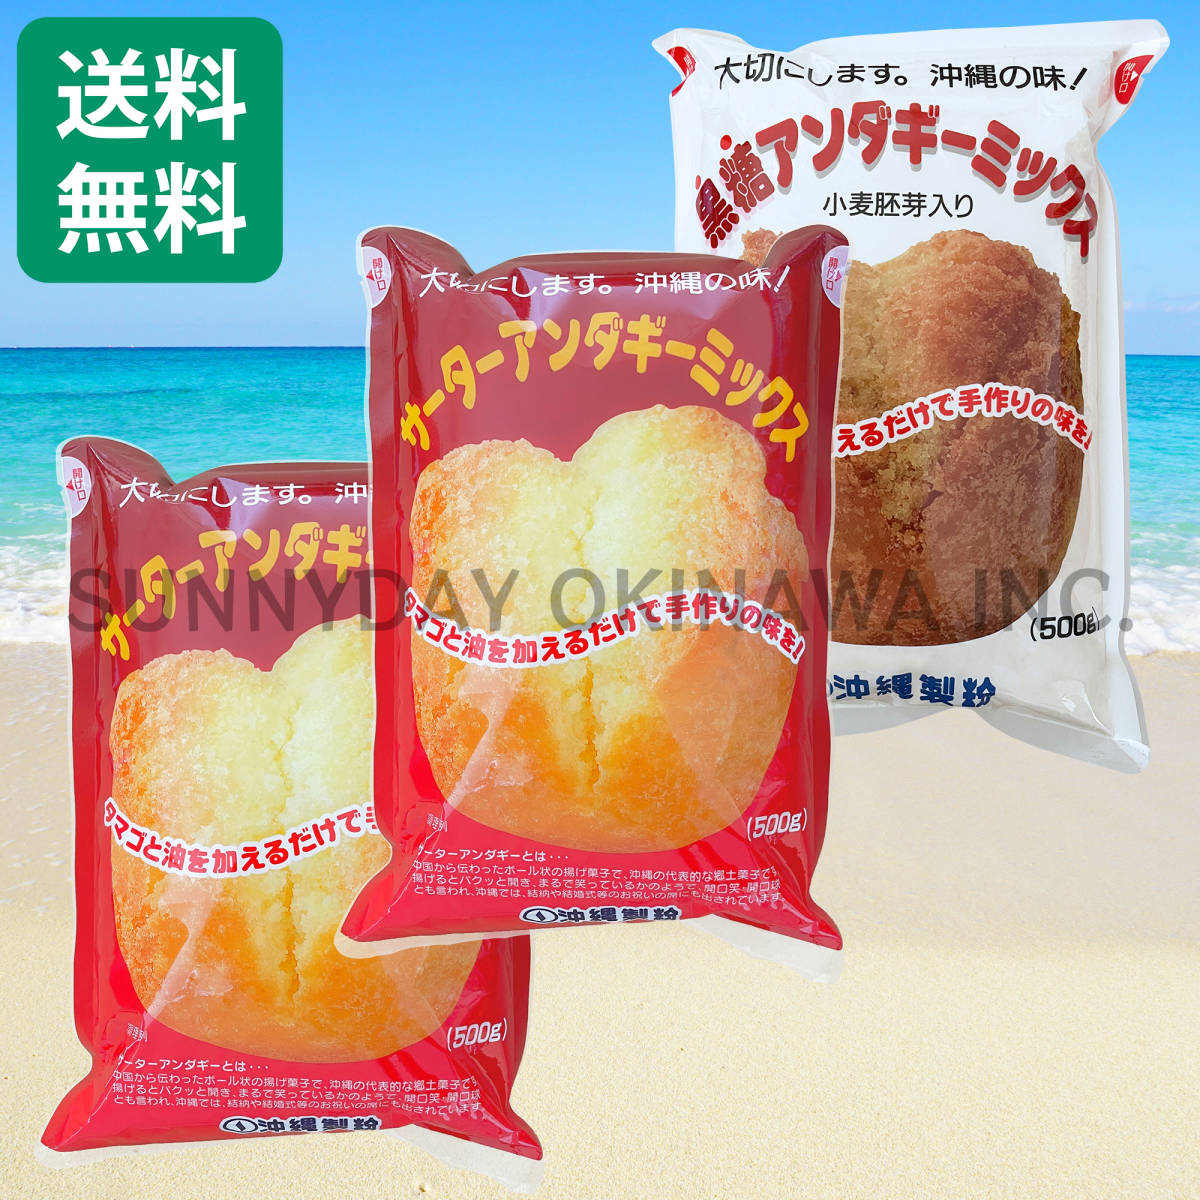 sa-ta- нижний gi- Mix 3 пакет комплект простой коричневый сахар Okinawa производства мука смешанная мука . земля производство ваш заказ 